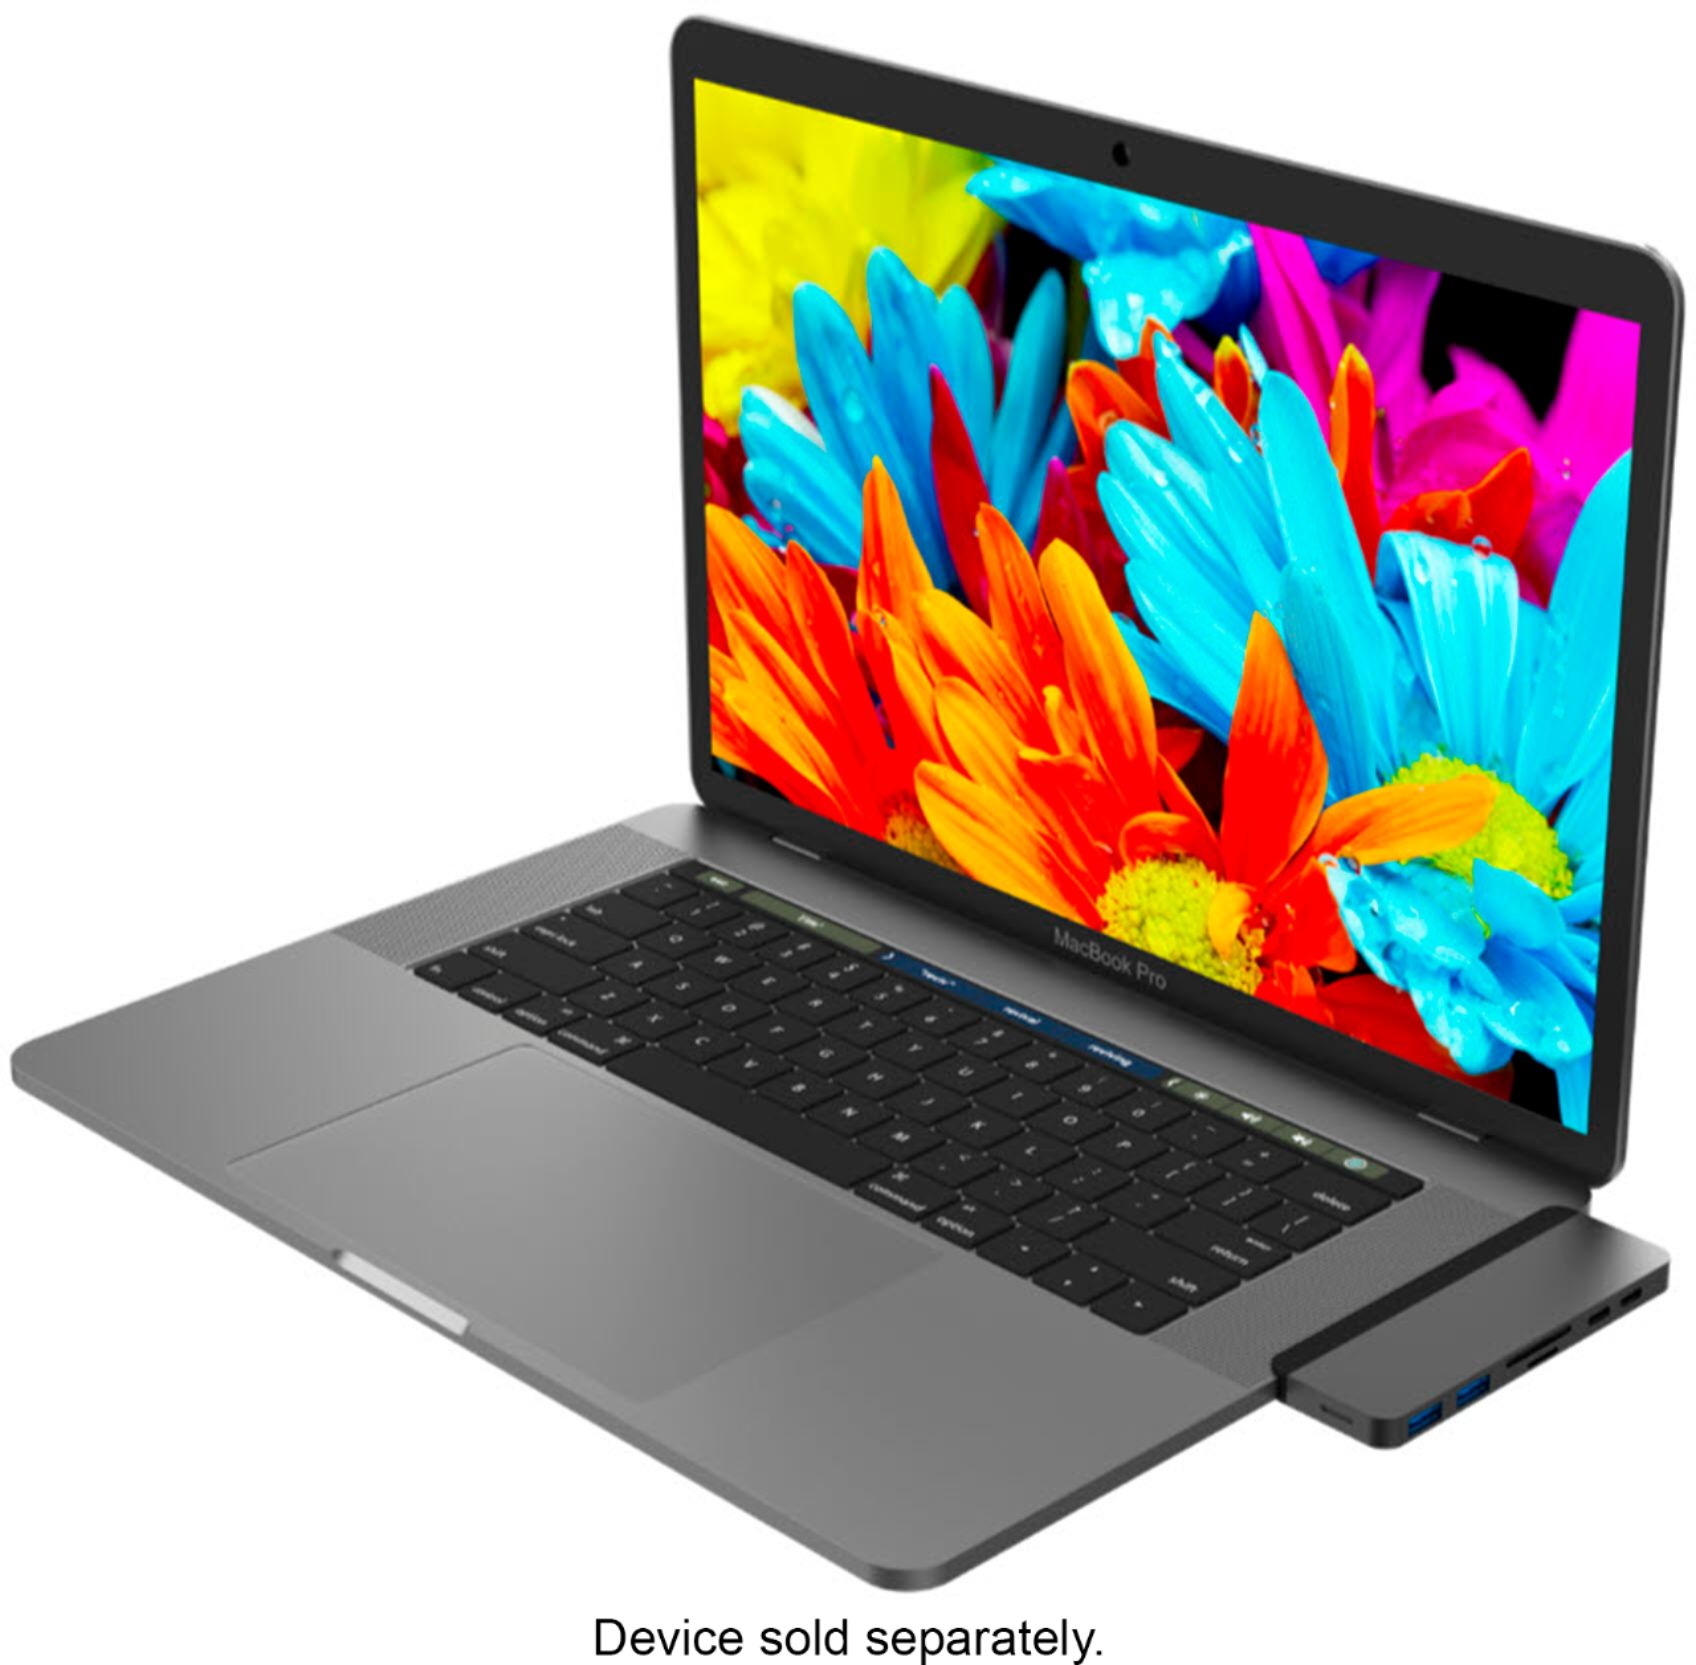 7-in-2 USB C Hub for MacBook (Space Gray) – Purgotech